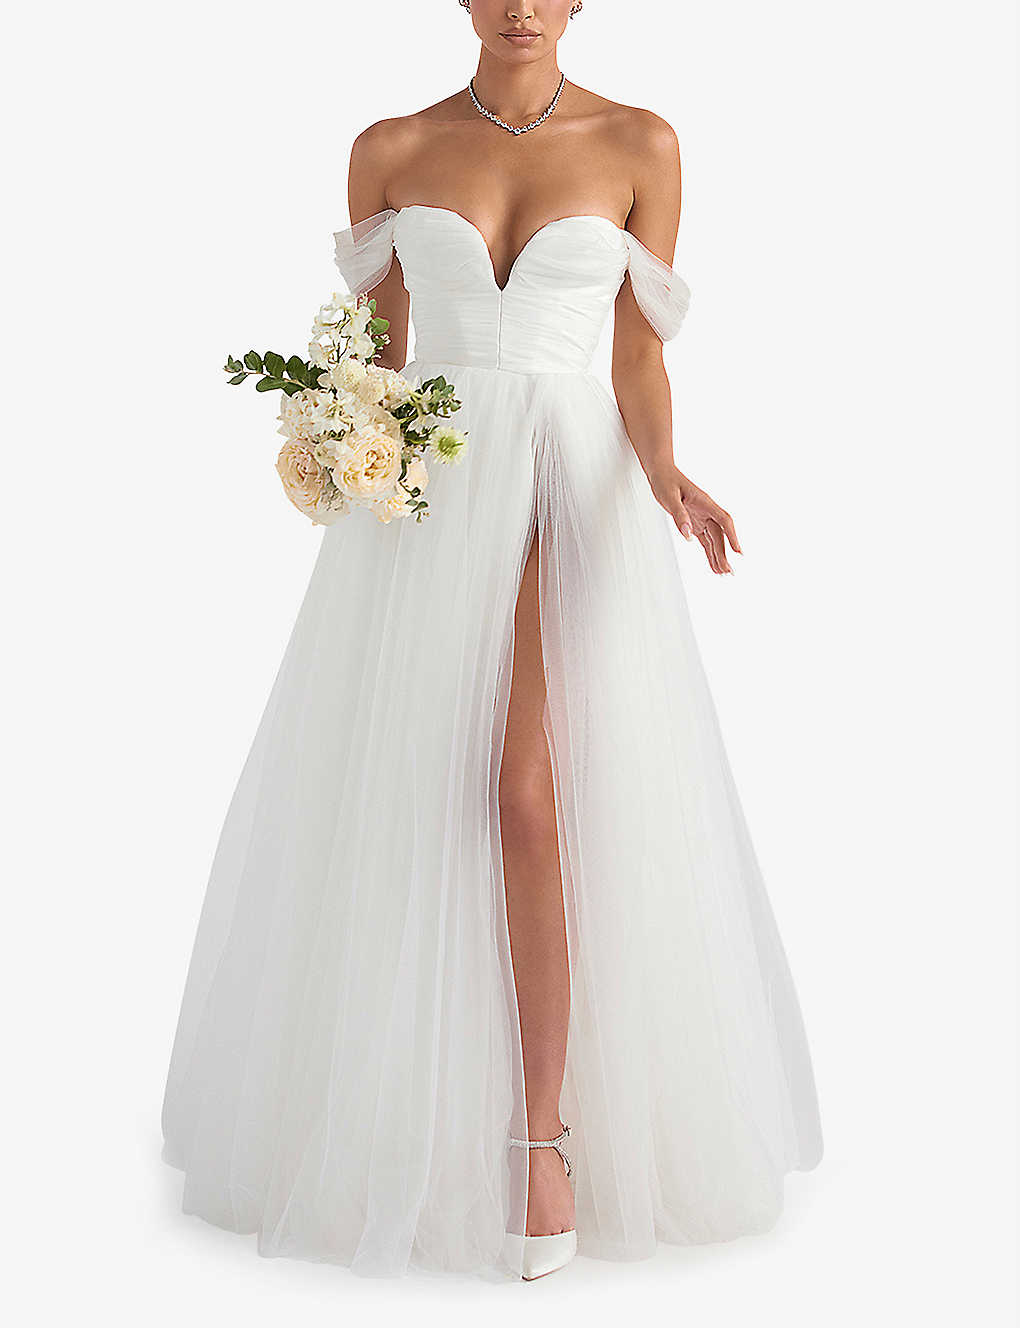 House of CB Wedding Dresses 2020 - Dress for the Wedding